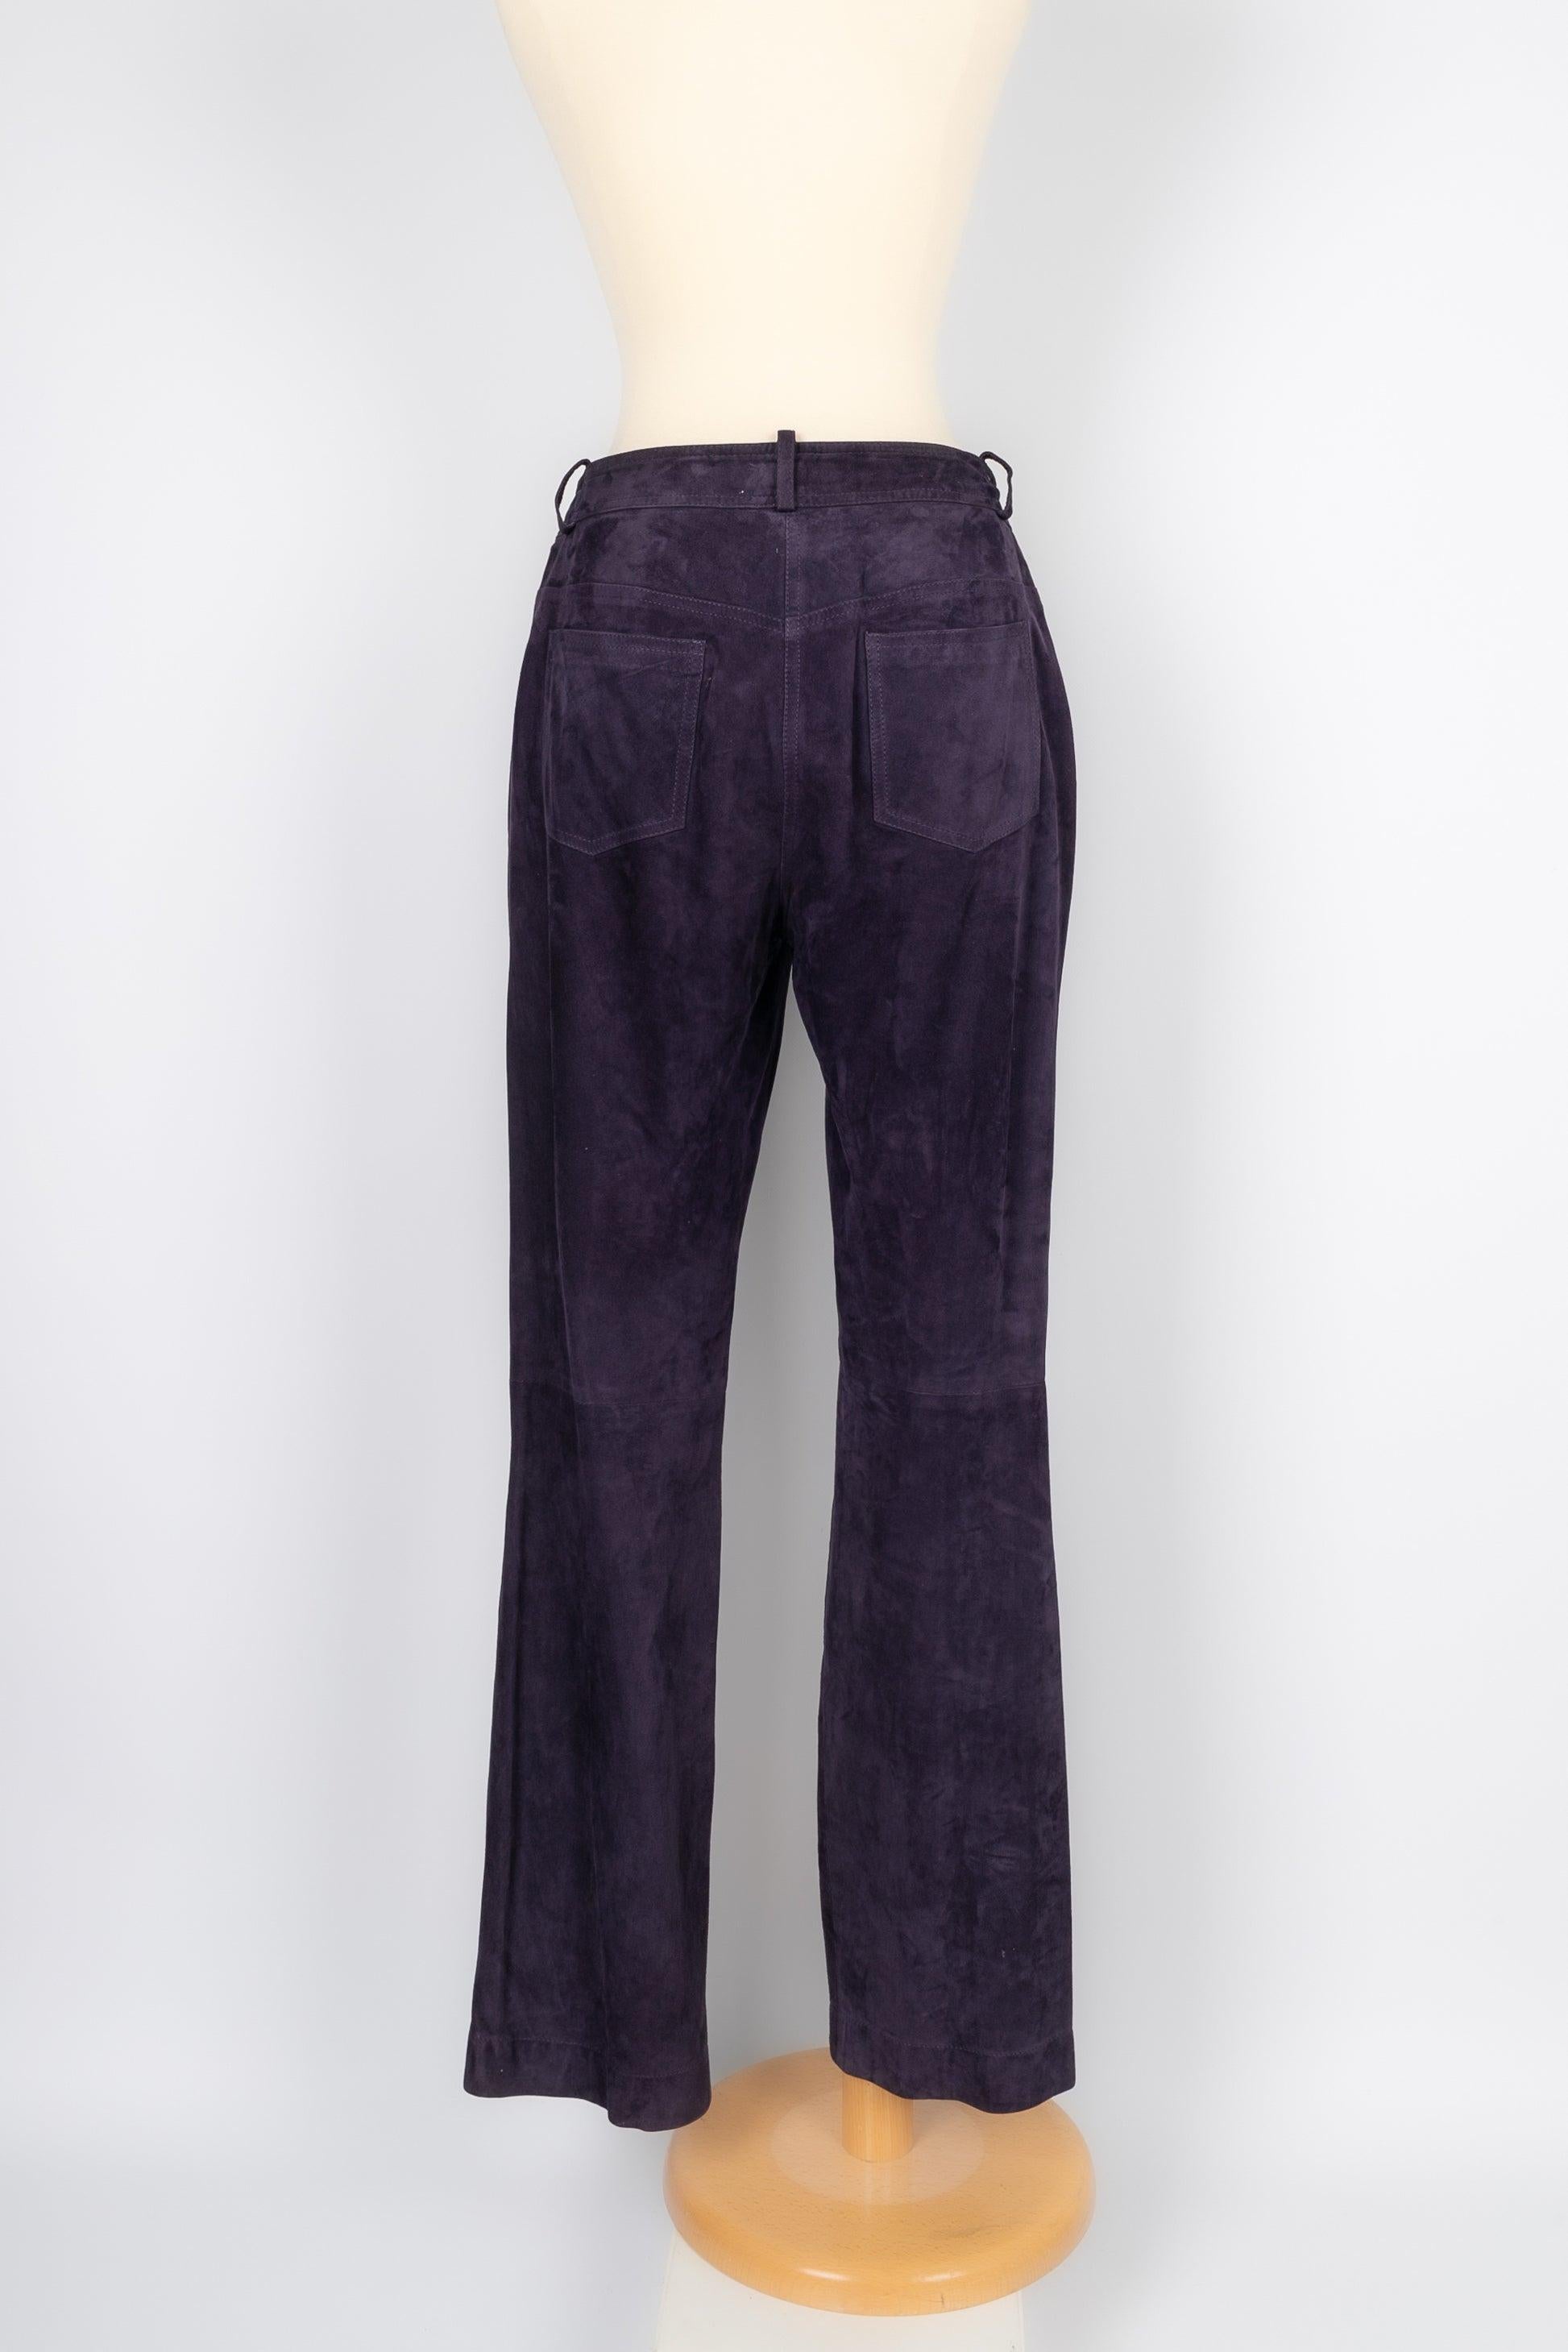 Christian Dior Purple Suede Pants In Good Condition For Sale In SAINT-OUEN-SUR-SEINE, FR